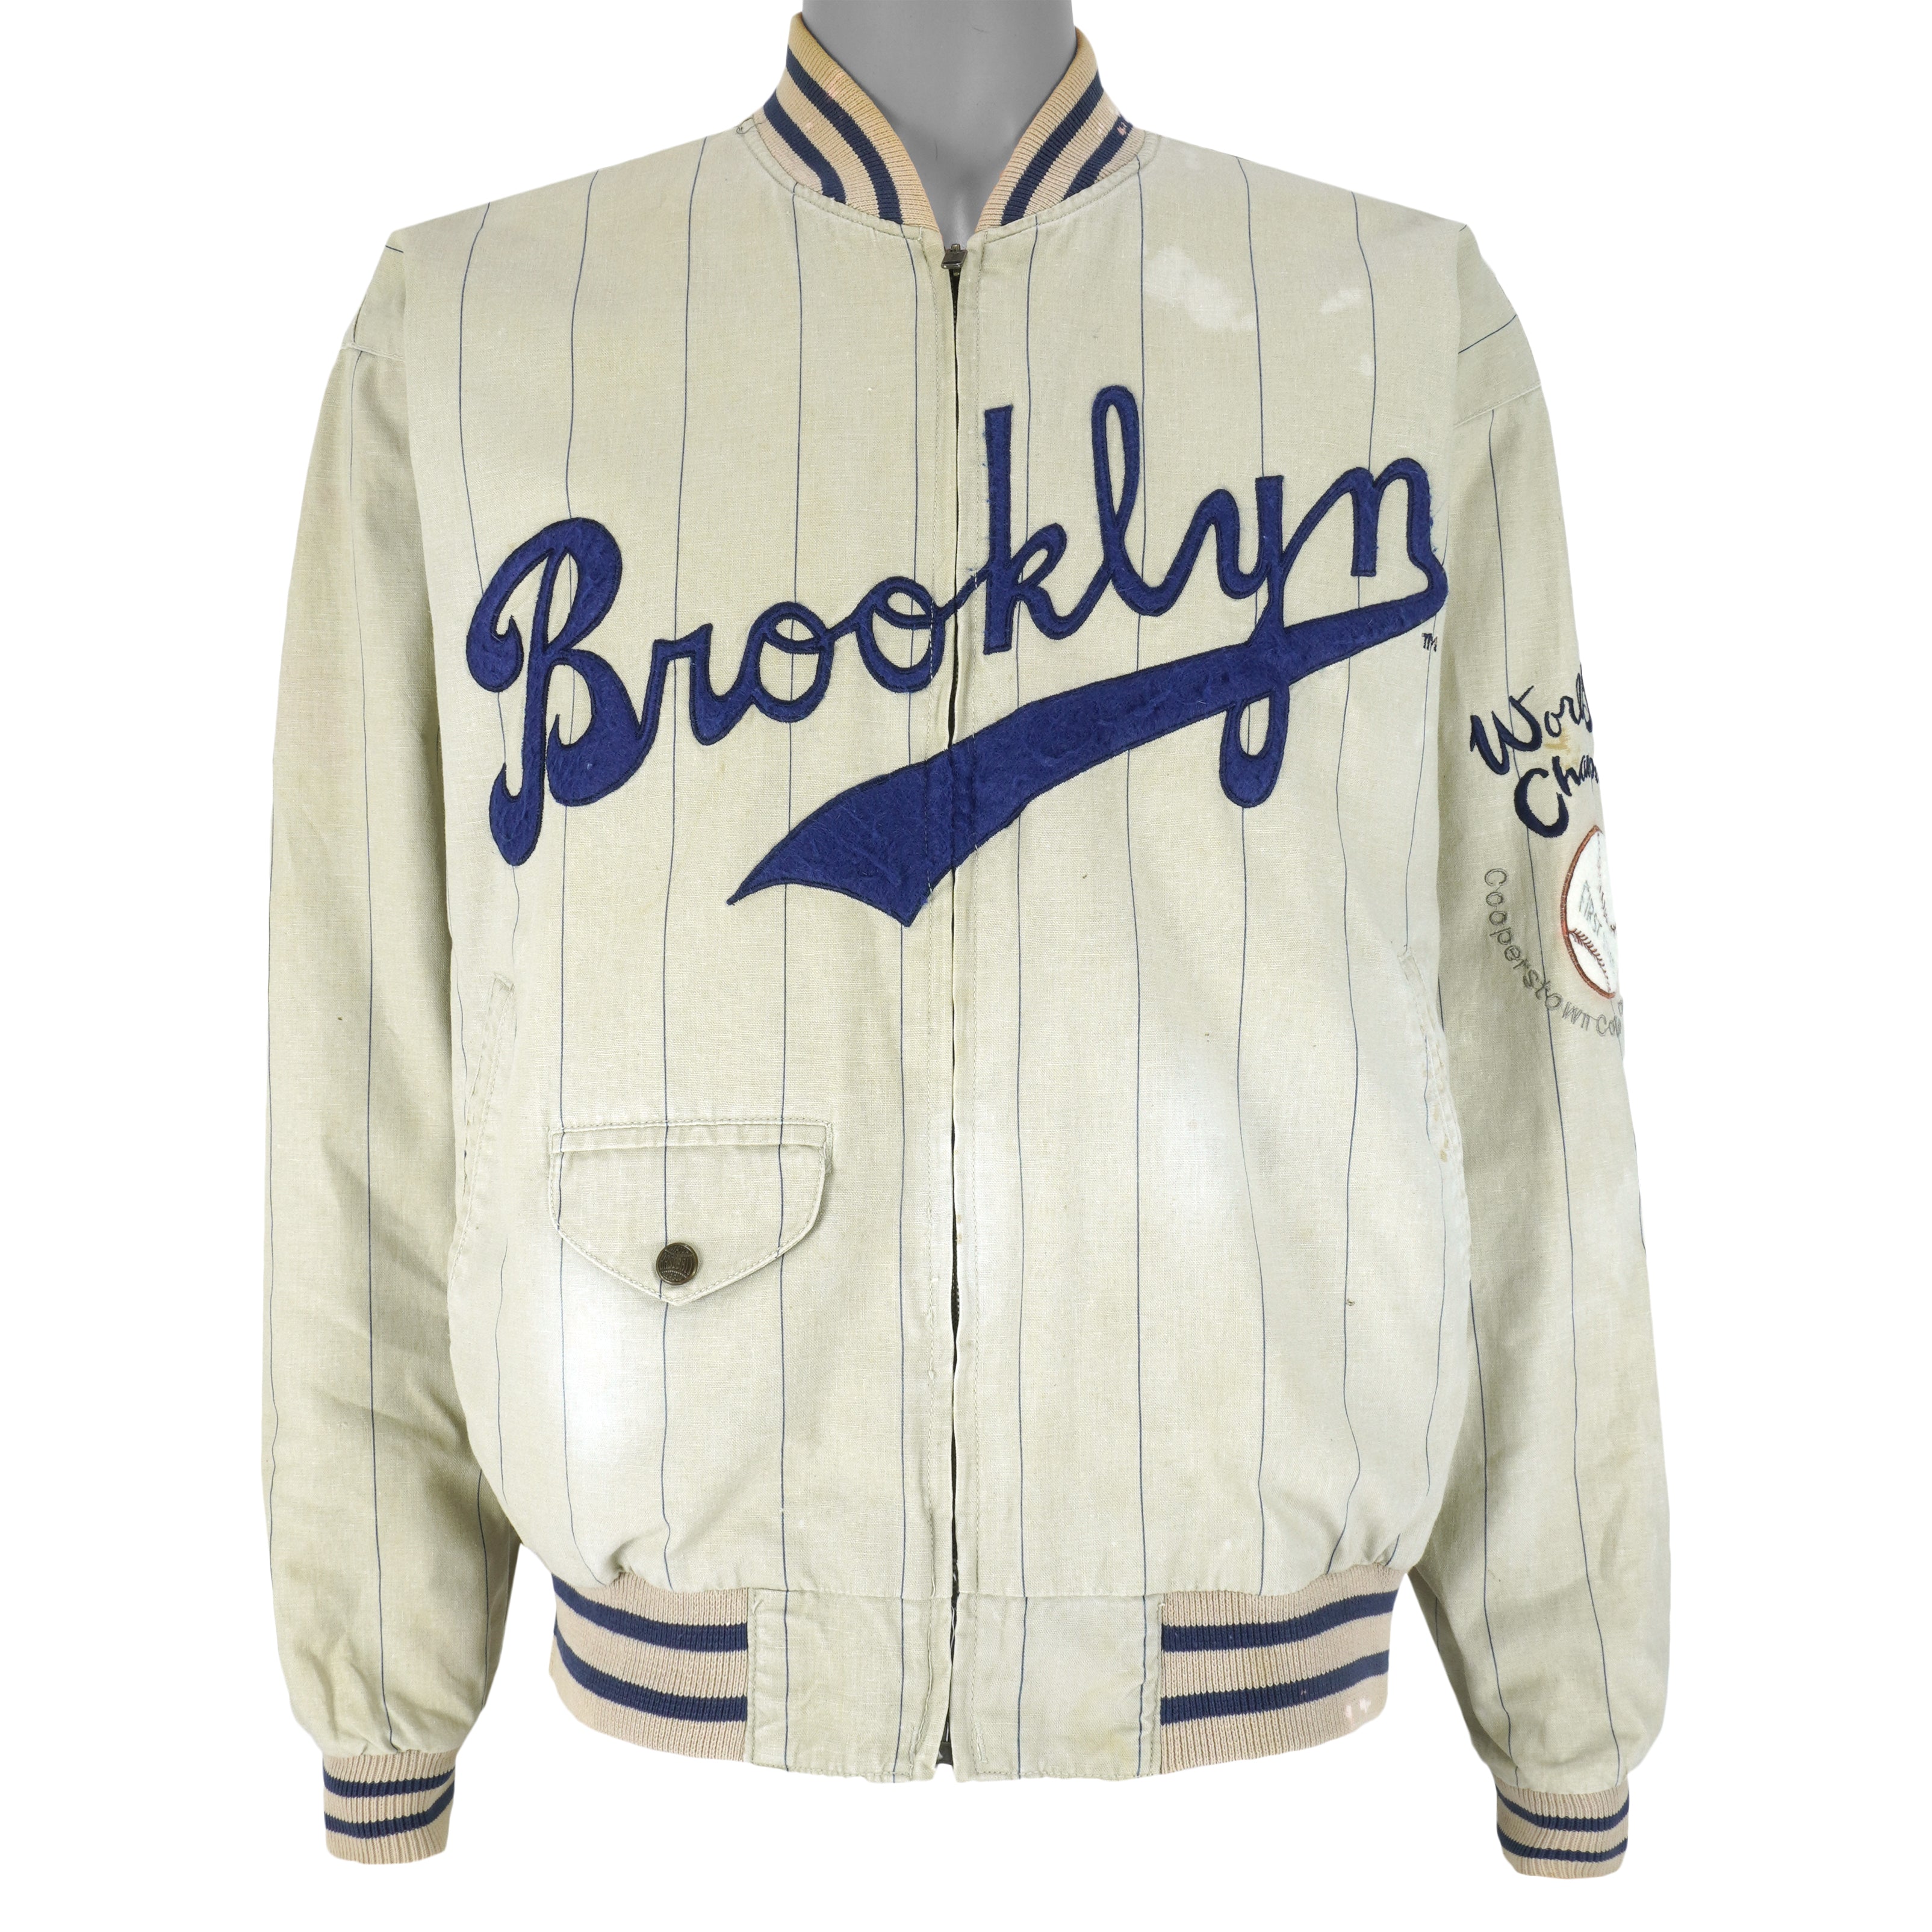 Vintage MLB (Mirage) - Brooklyn Dodgers 1955 World Series